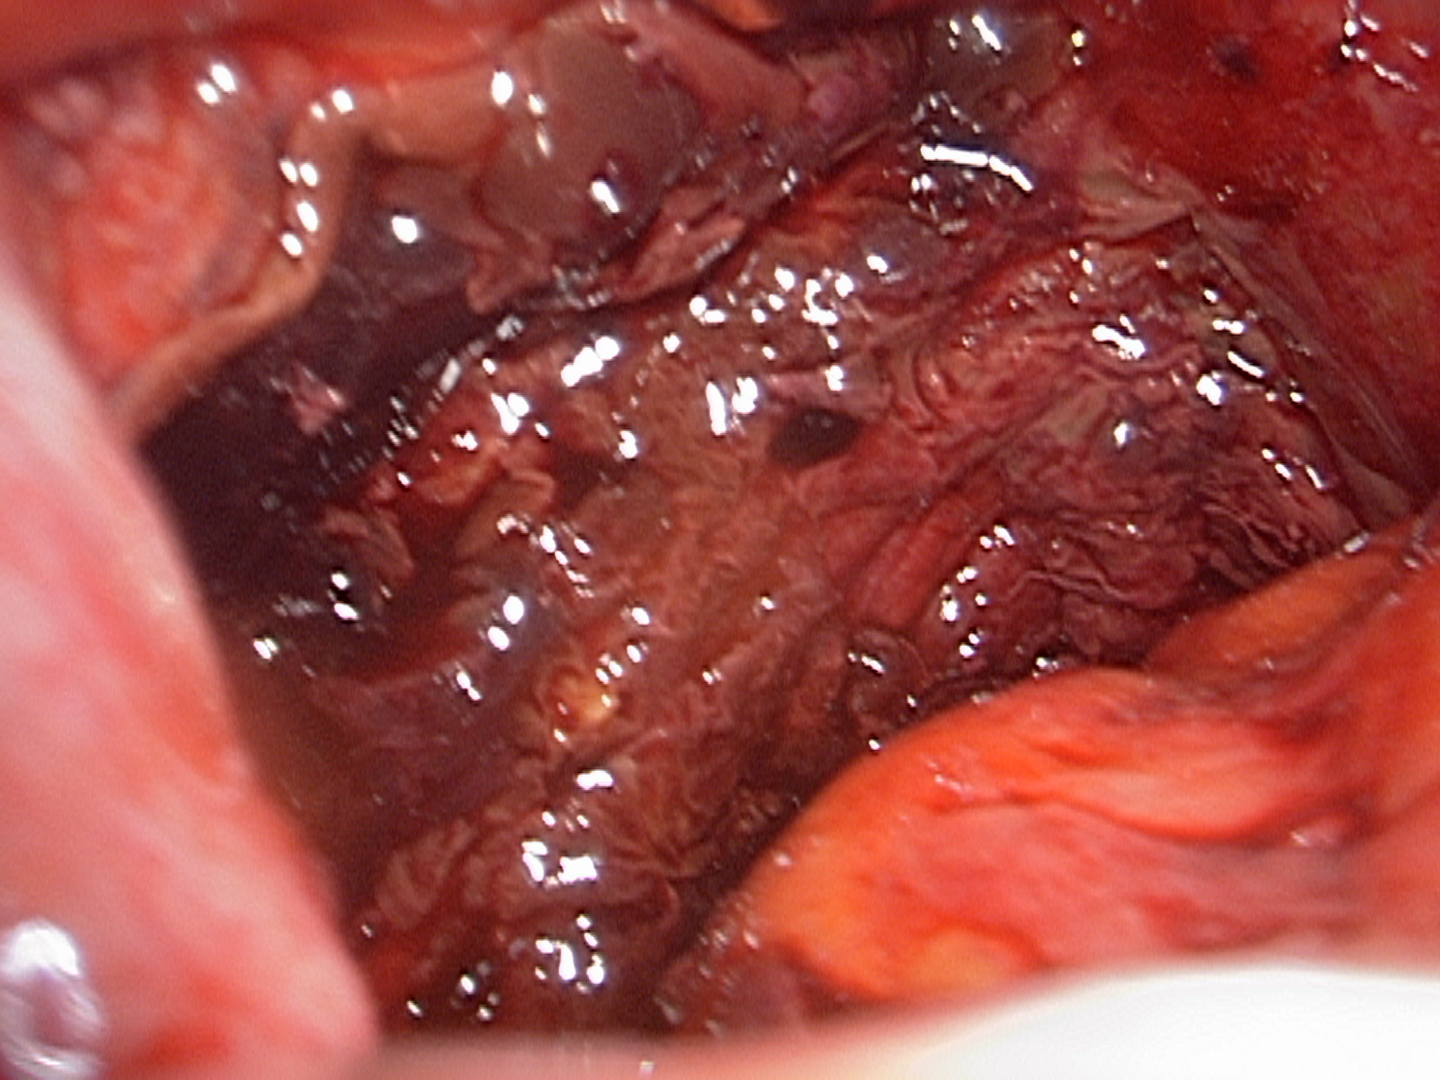 severe endometriosis between uterus and bowel